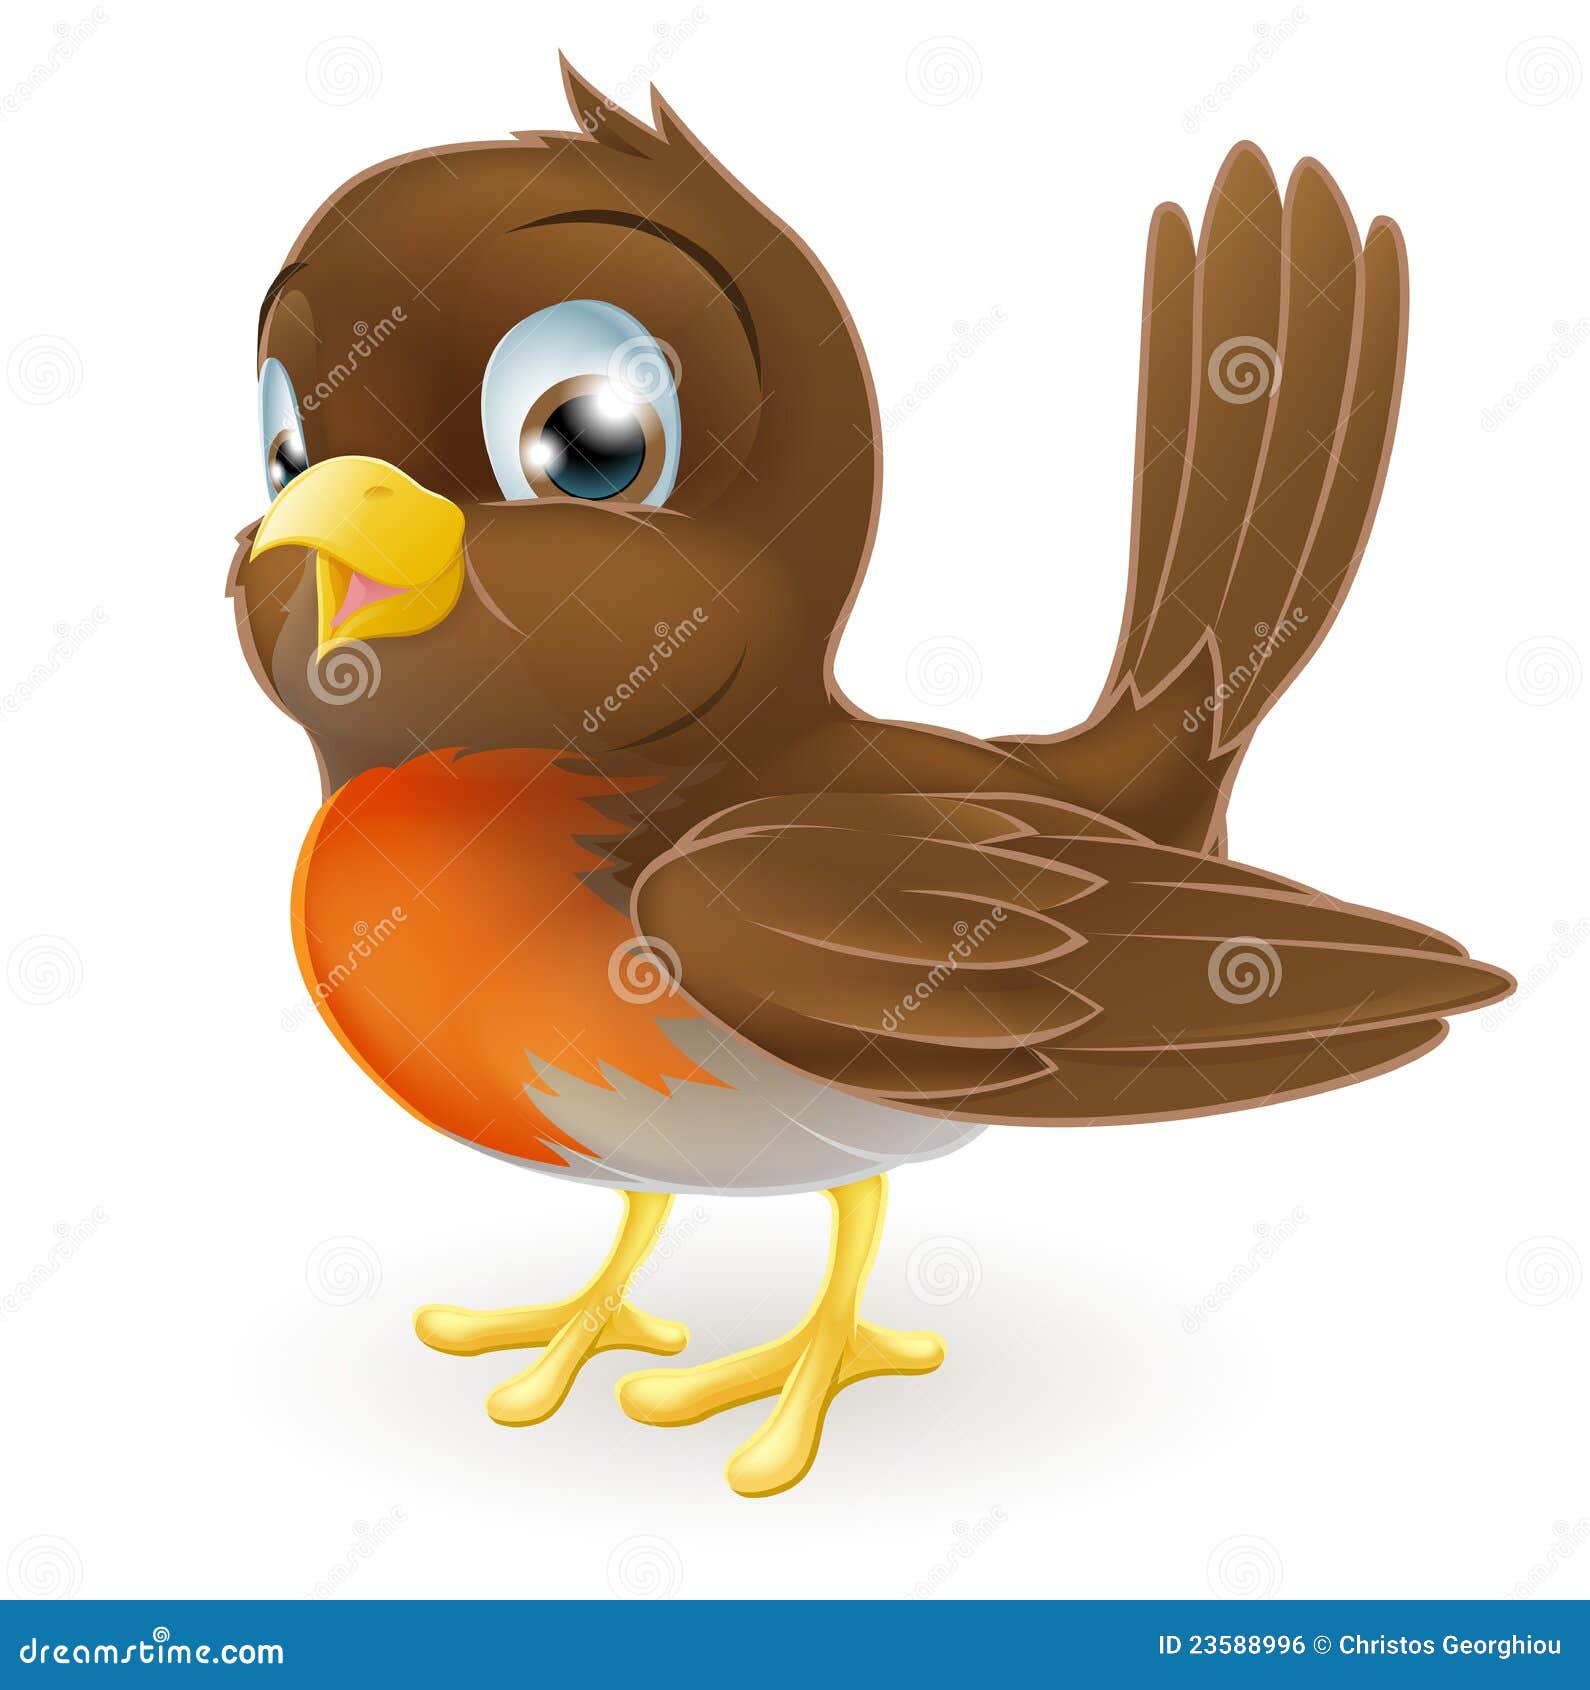 Lady Bird Free Vector Download